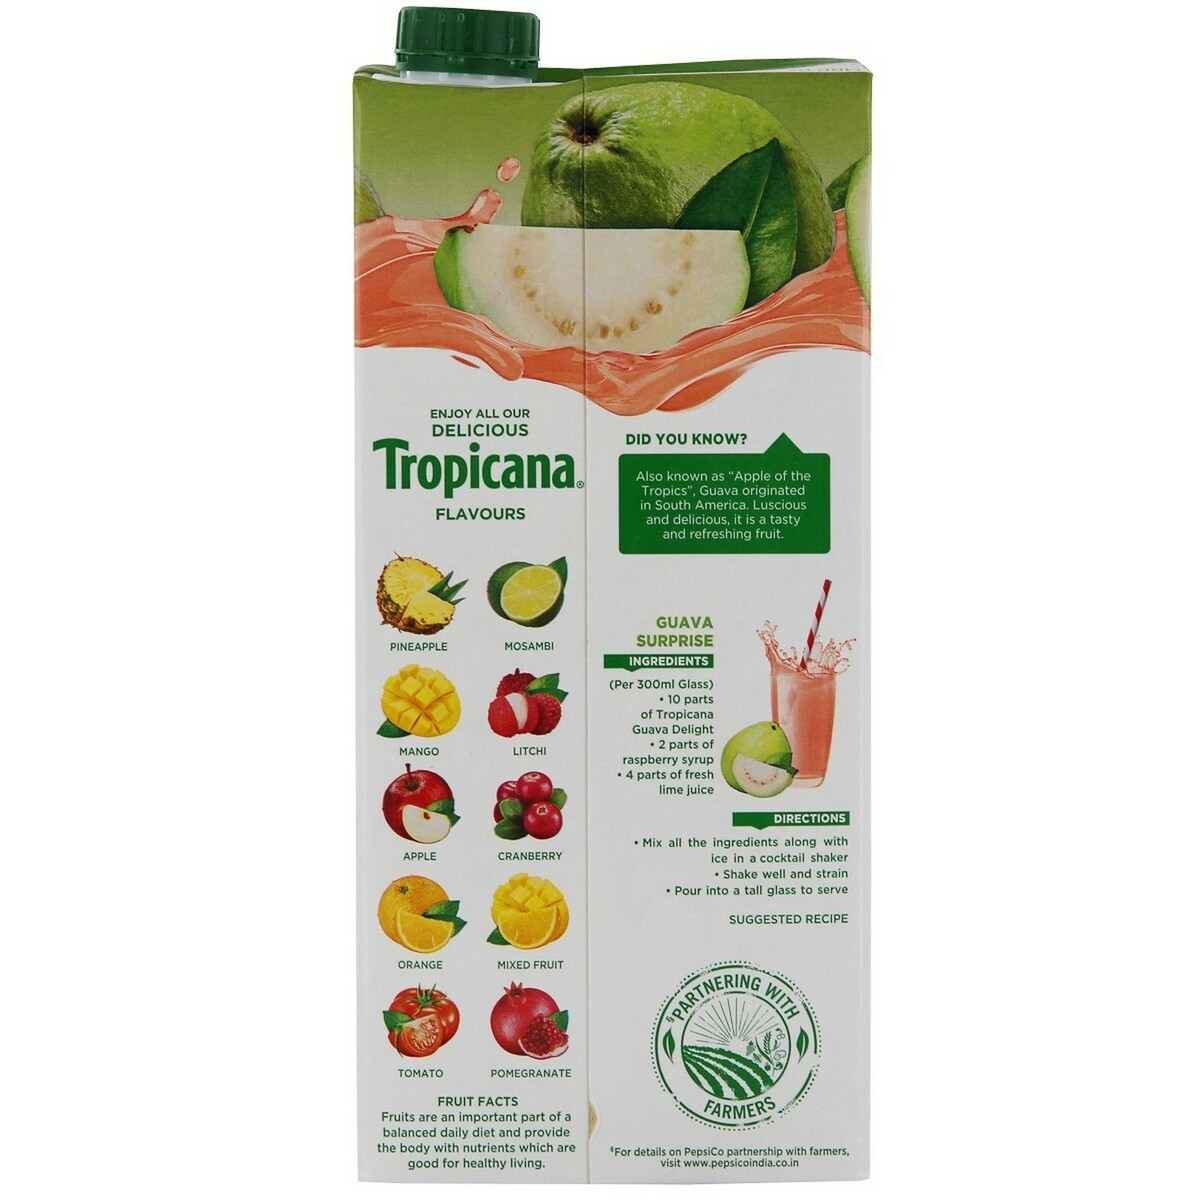 Tropicana Fruit Juice Pure Guava 1Litre